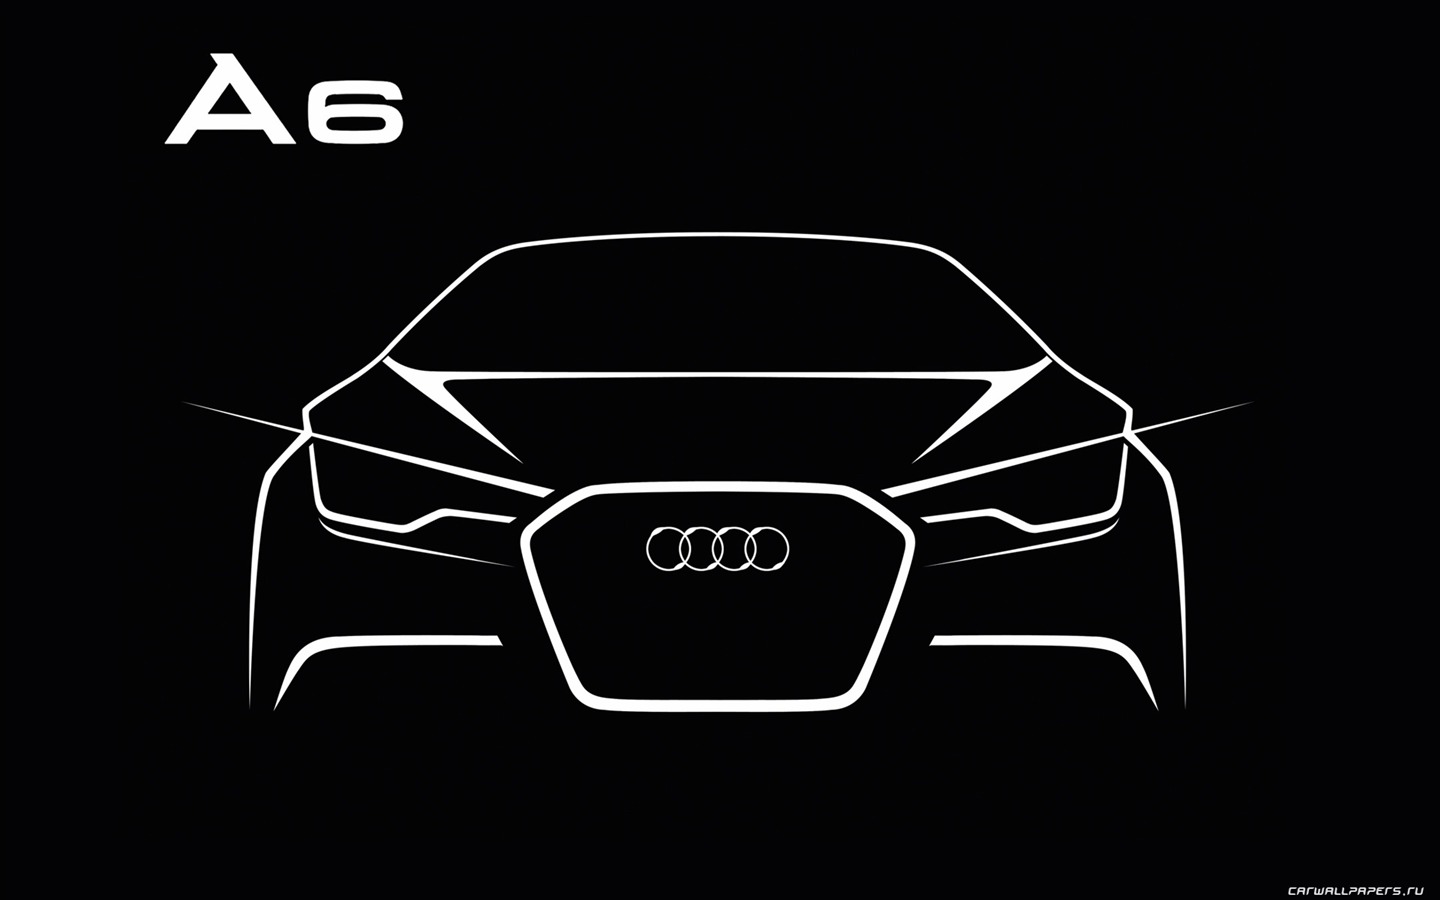 Audi A6 3.0 TDI quattro - 2011 奧迪 #28 - 1440x900